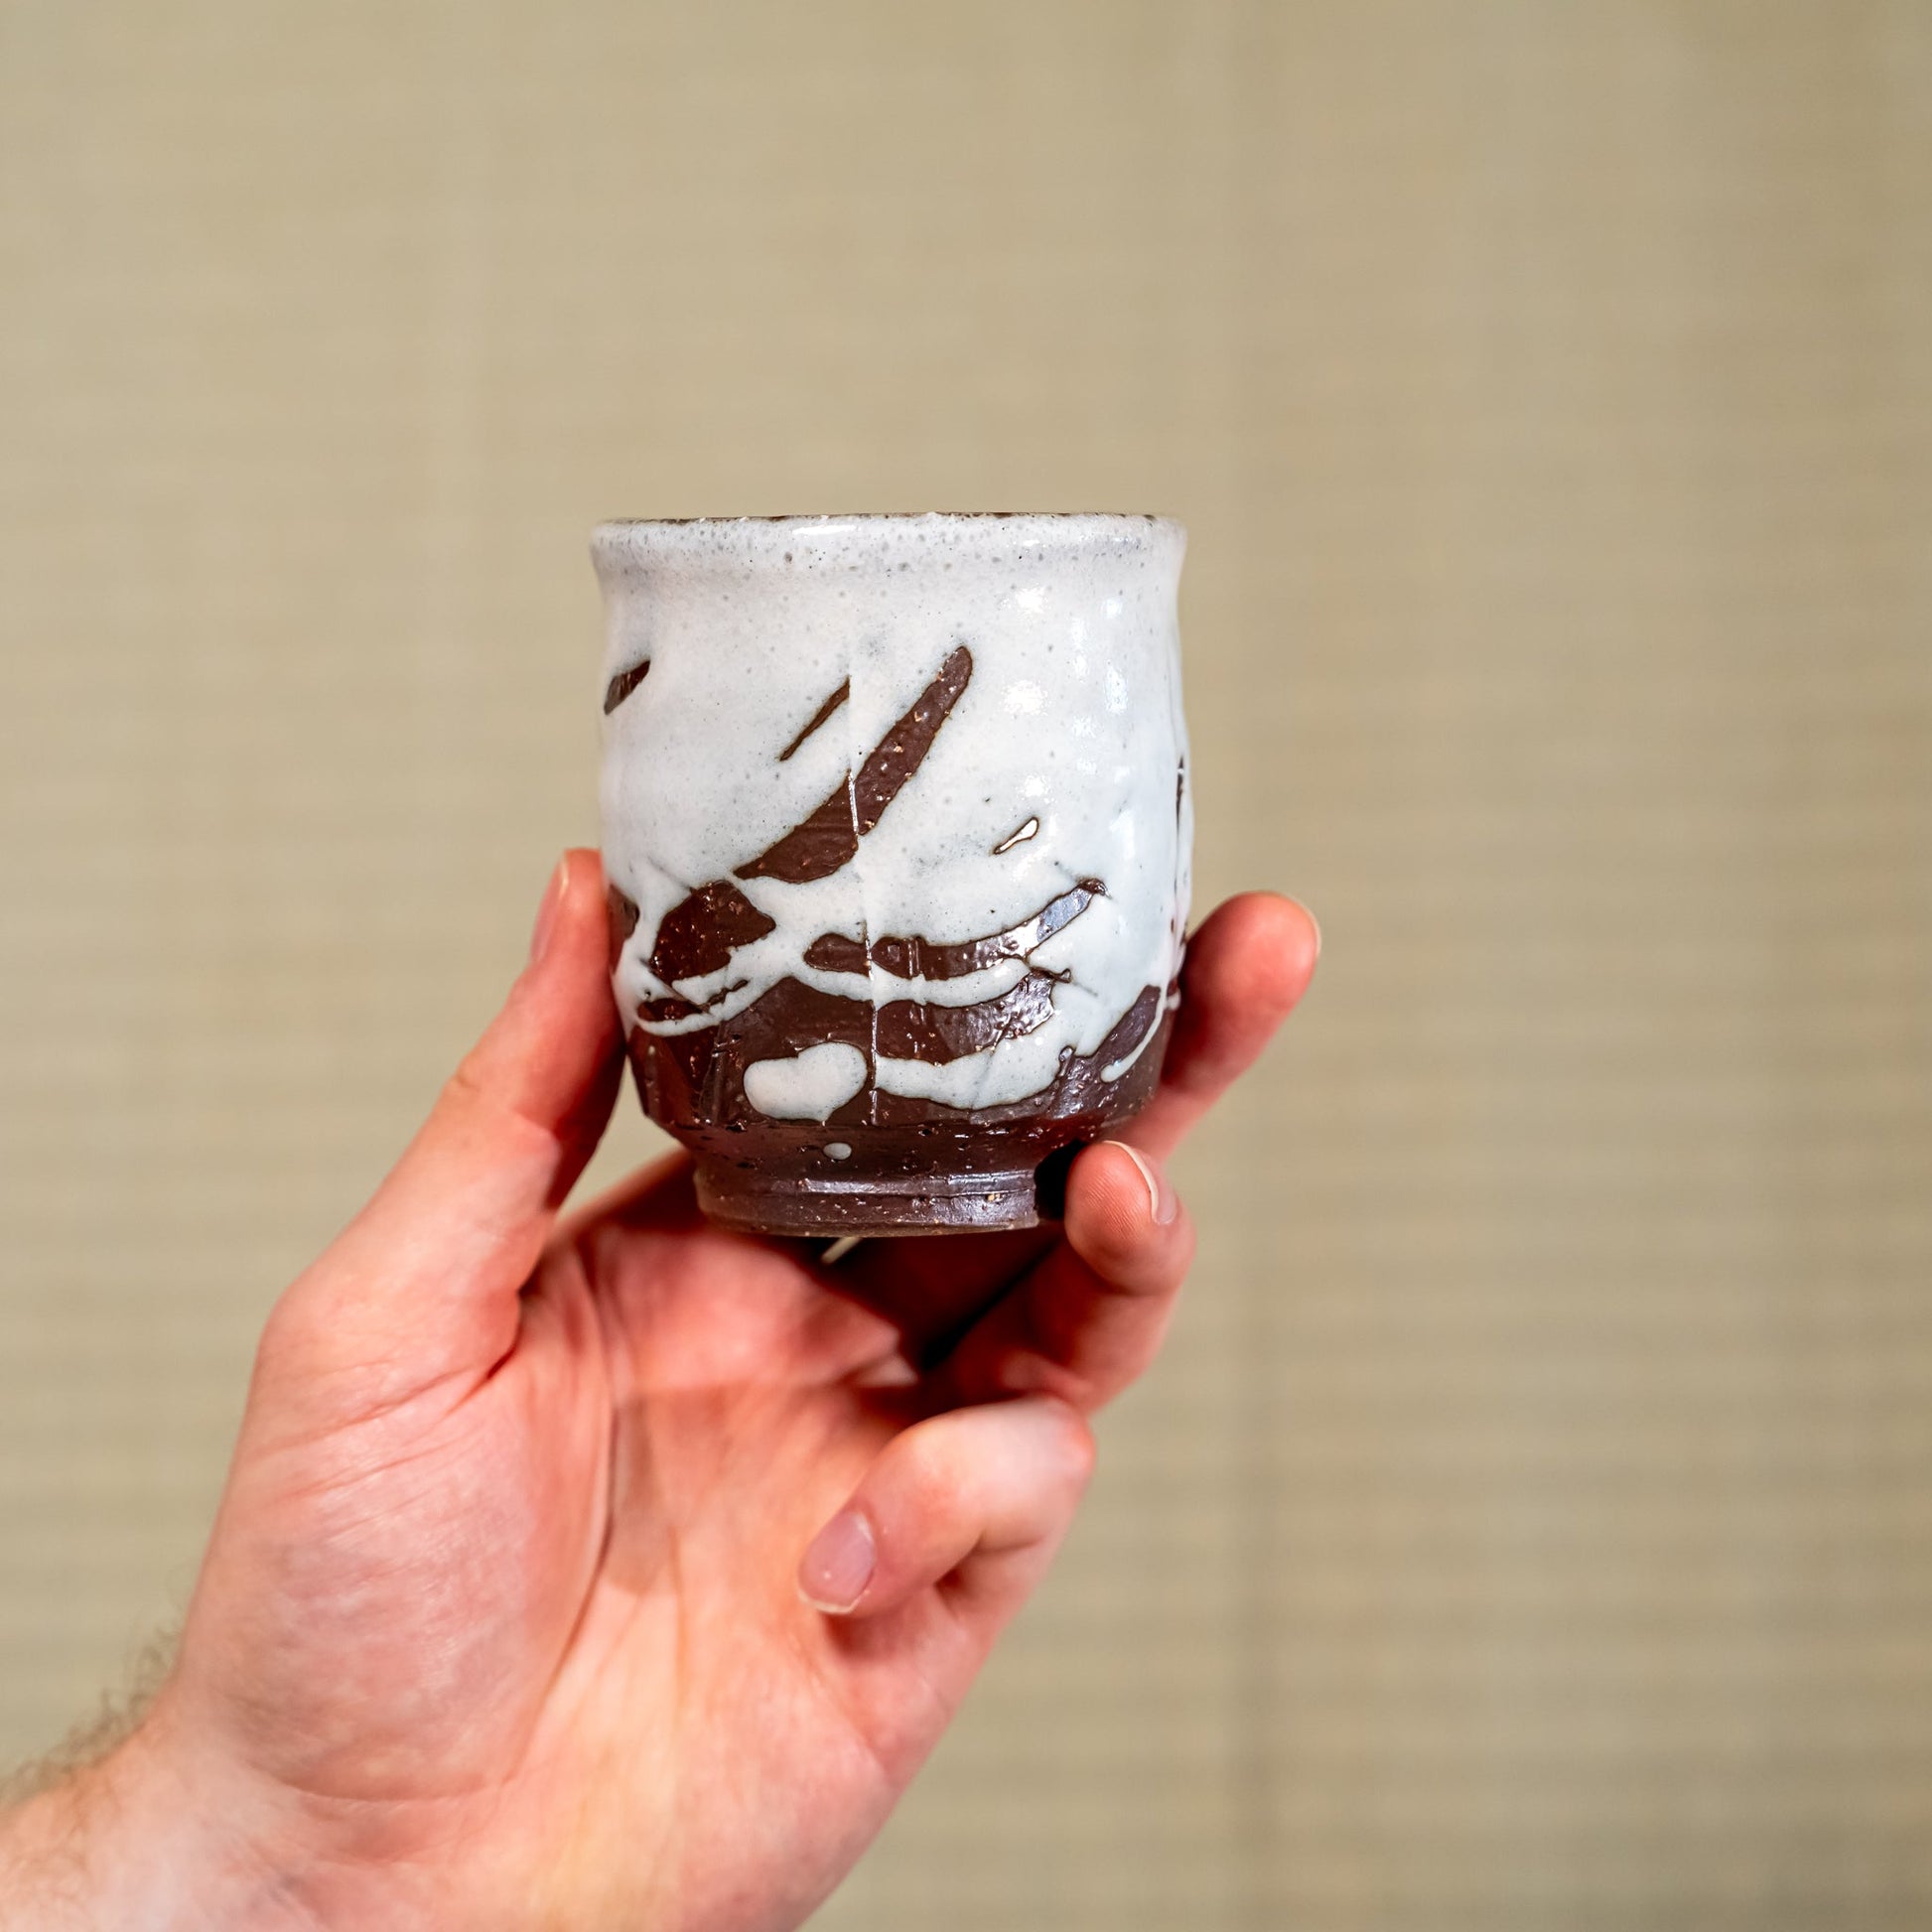 A Japanese ceramic Hagi yaki teacup held in hand